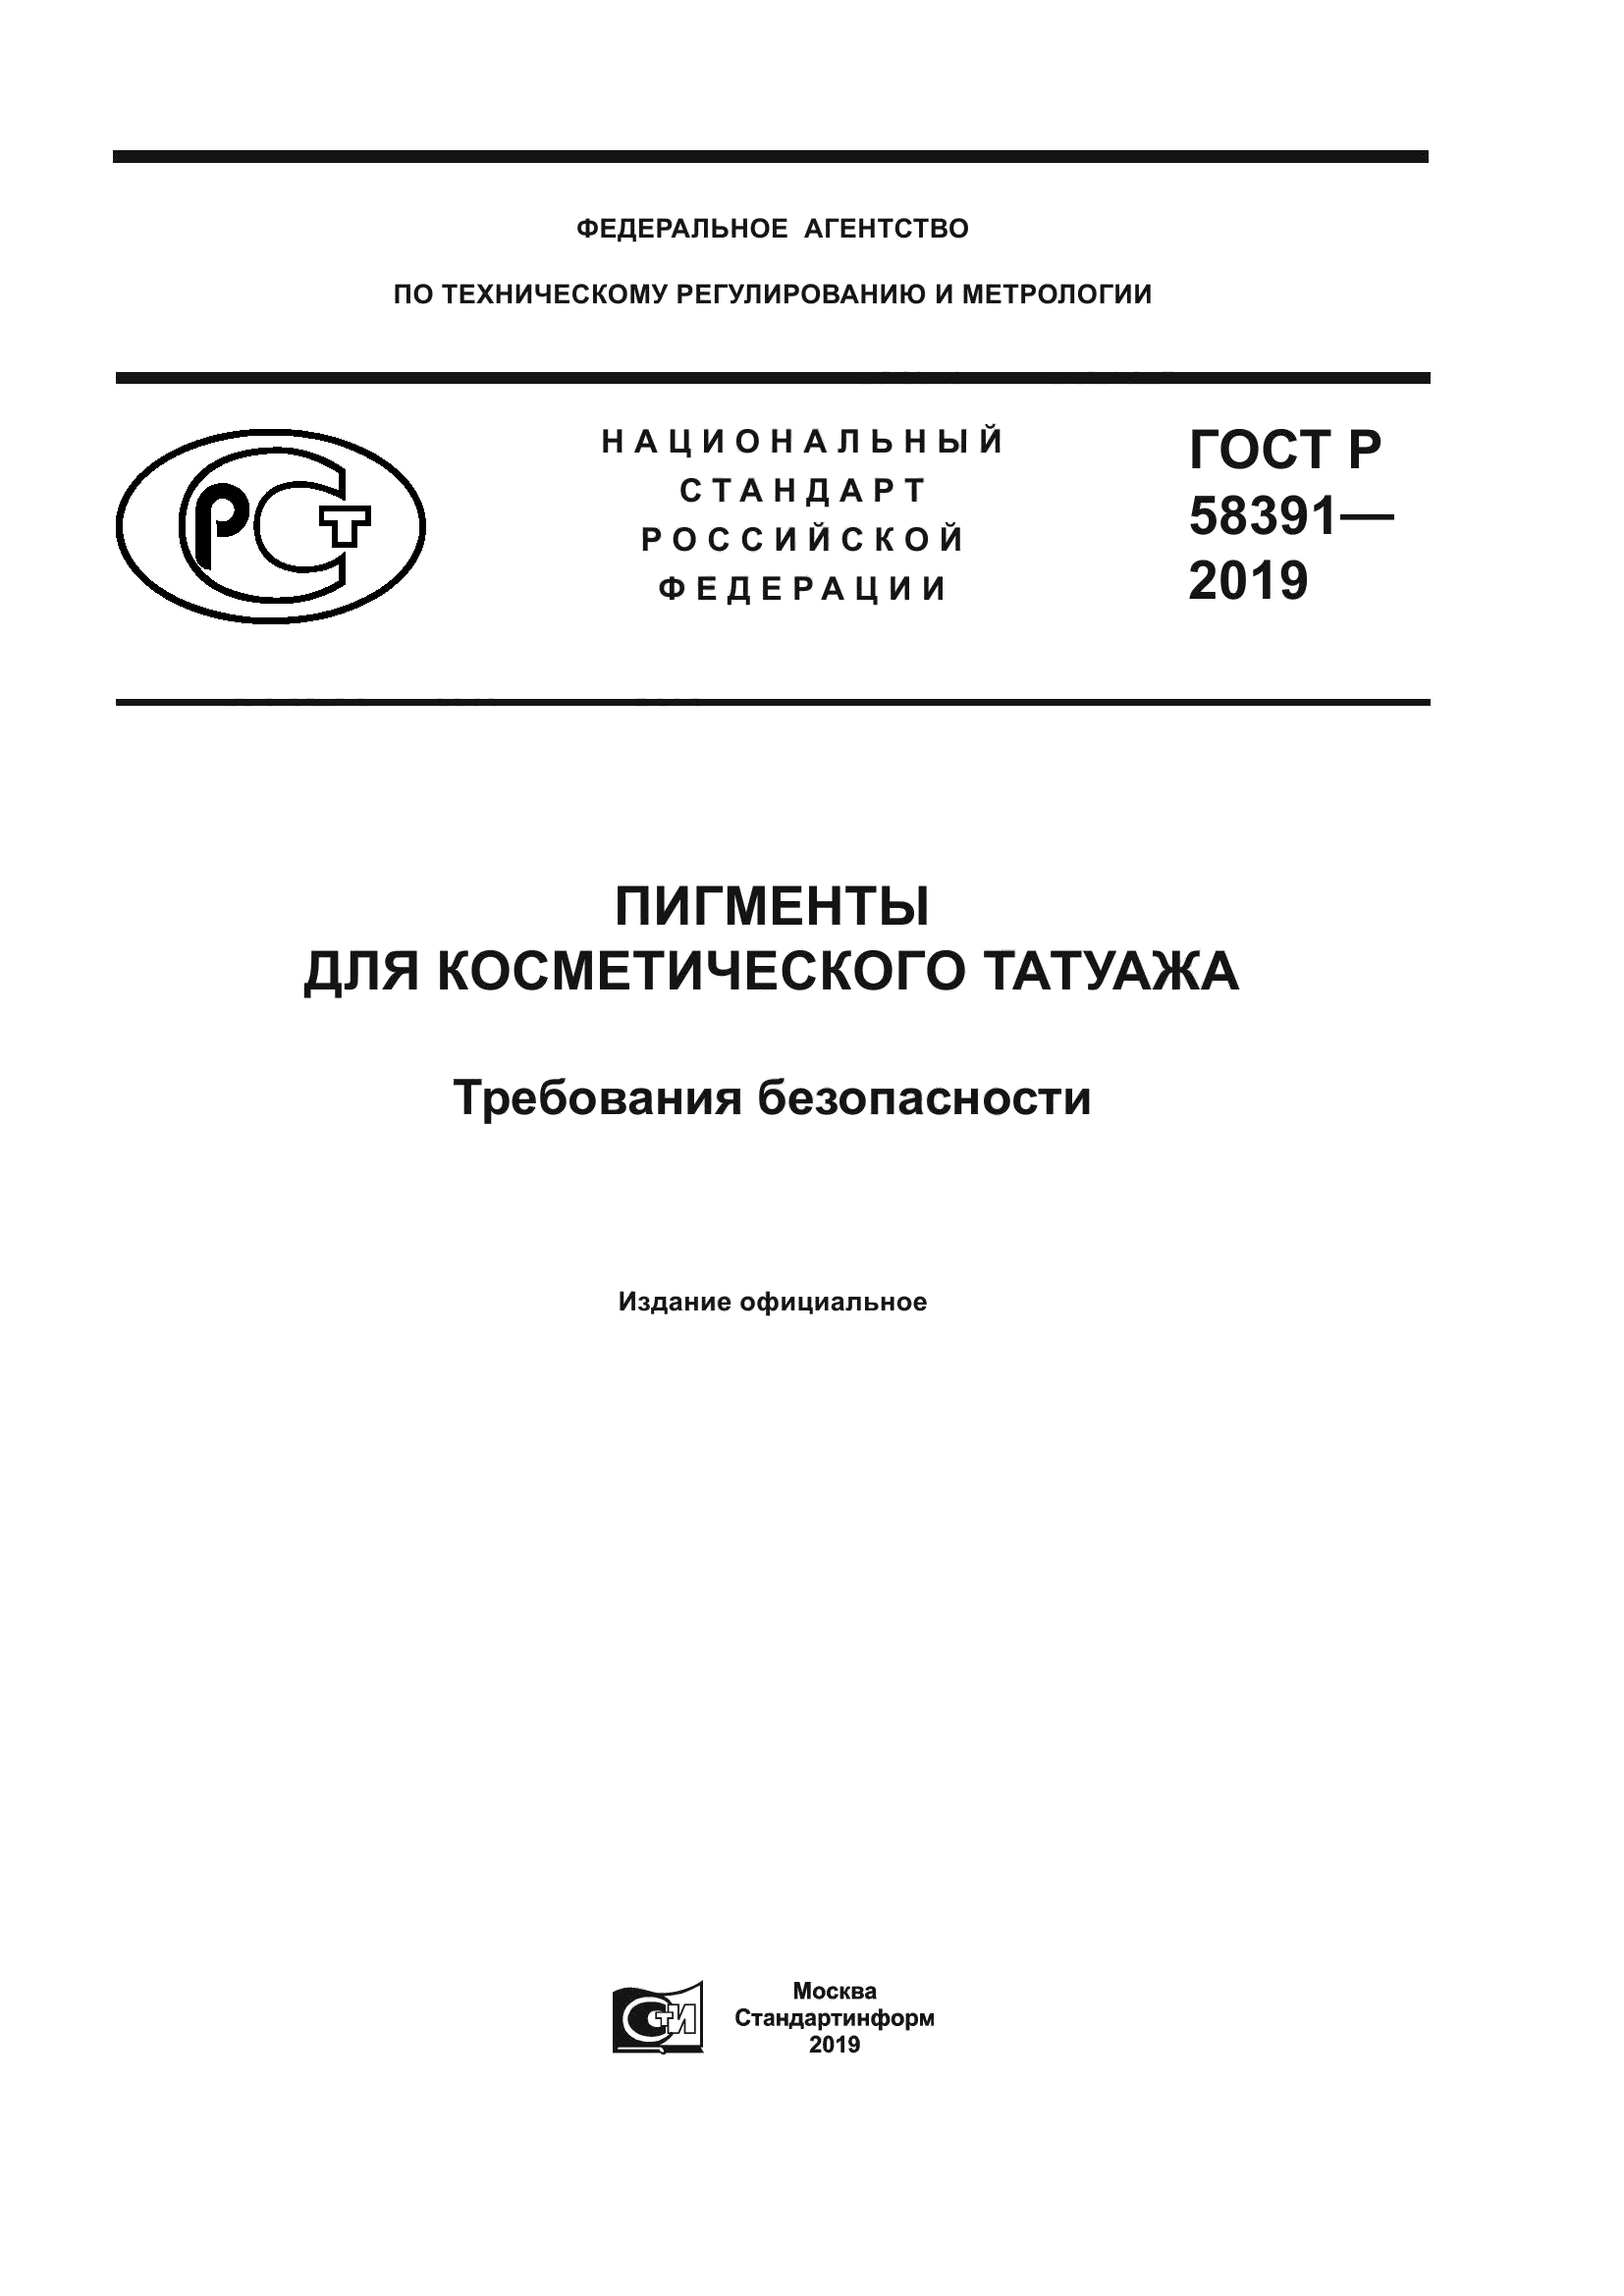 ГОСТ Р 58391-2019